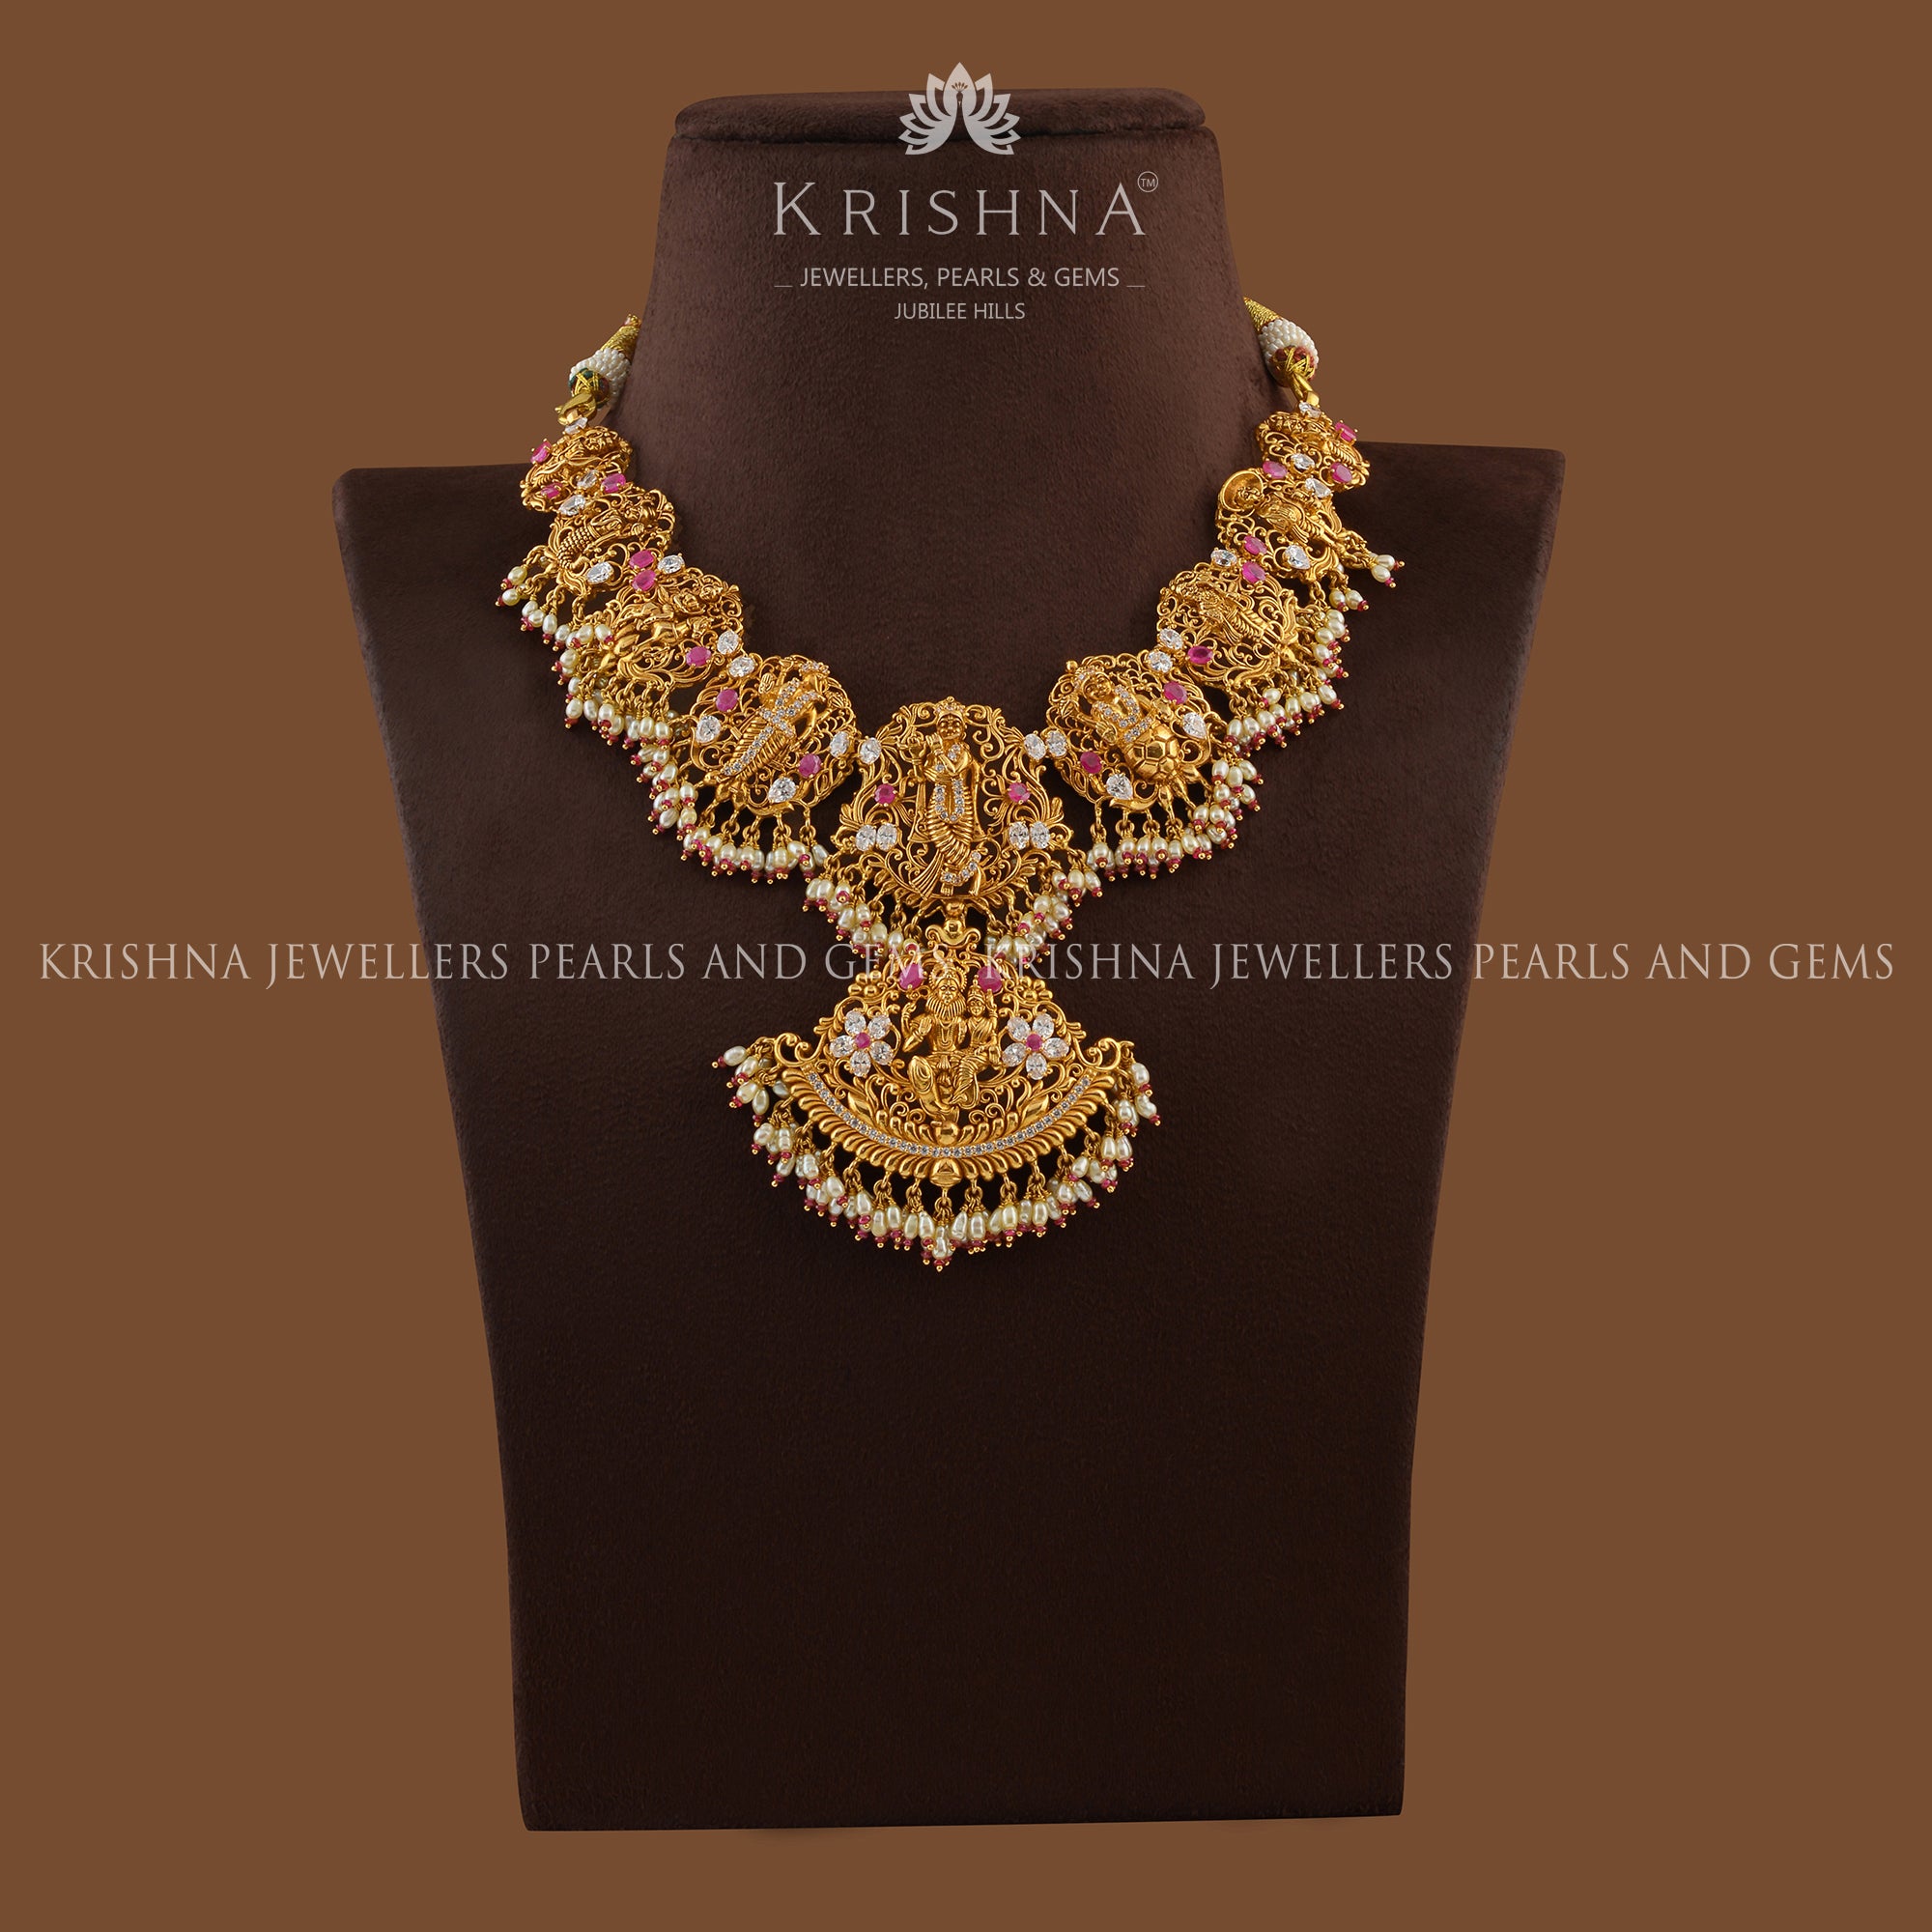 Dasavathar Gold Necklace in Filgree Work